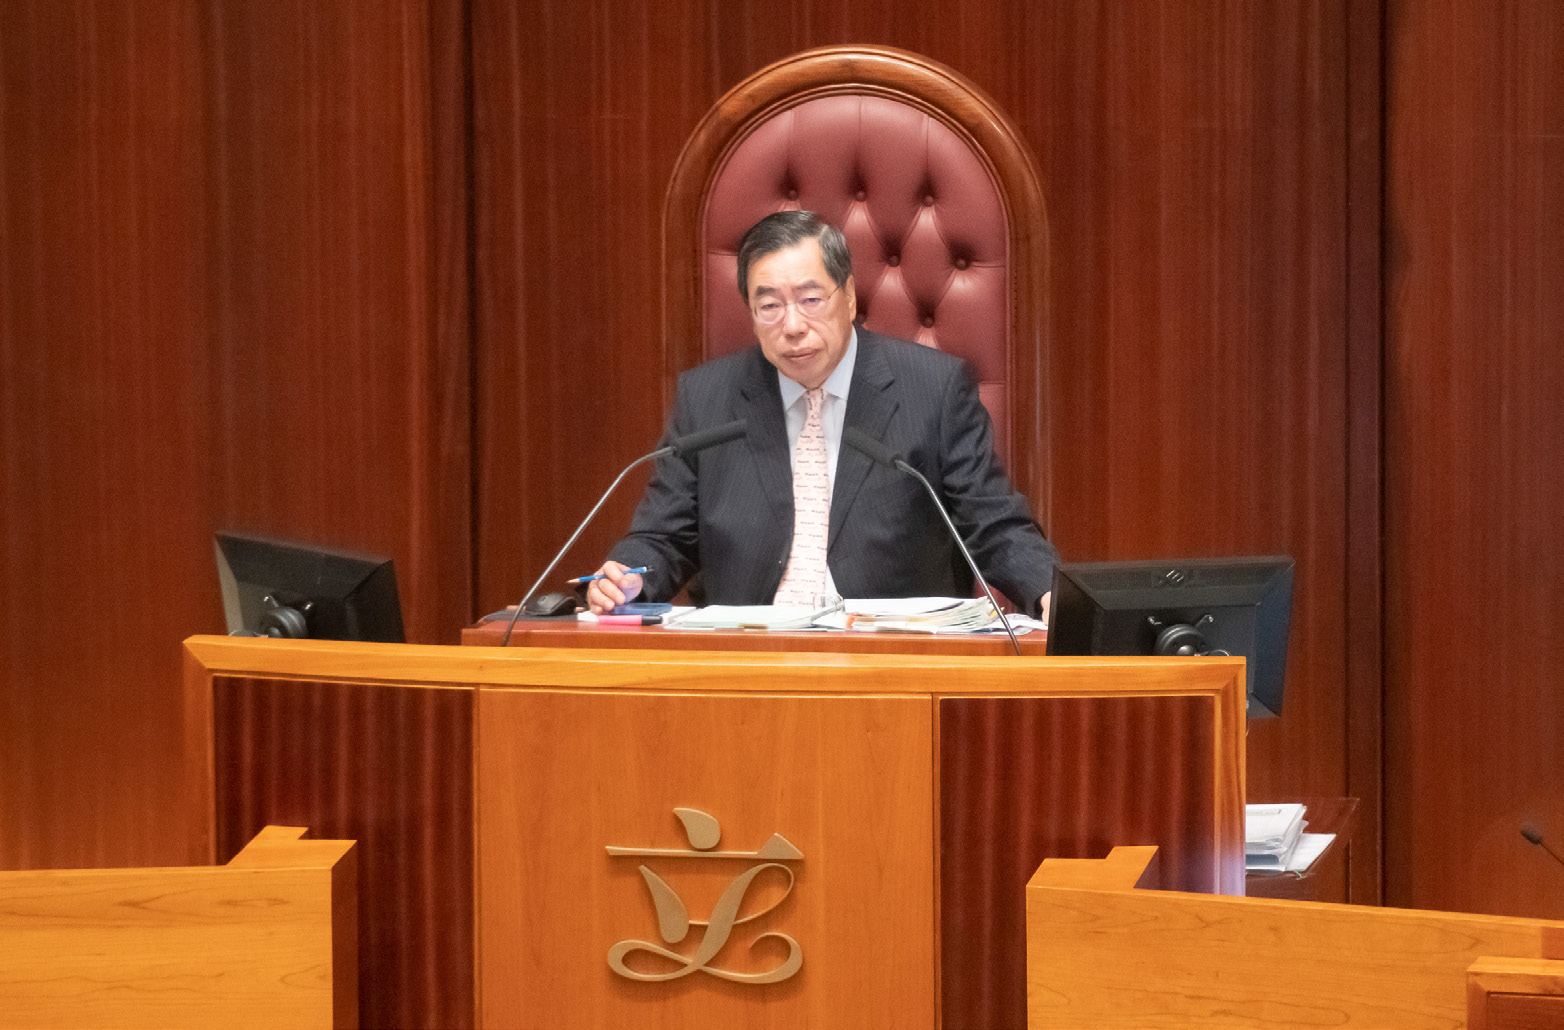 The President of the Seventh Legislative Council, Hon Andrew LEUNG Kwan-yuen, presiding over a Council meeting